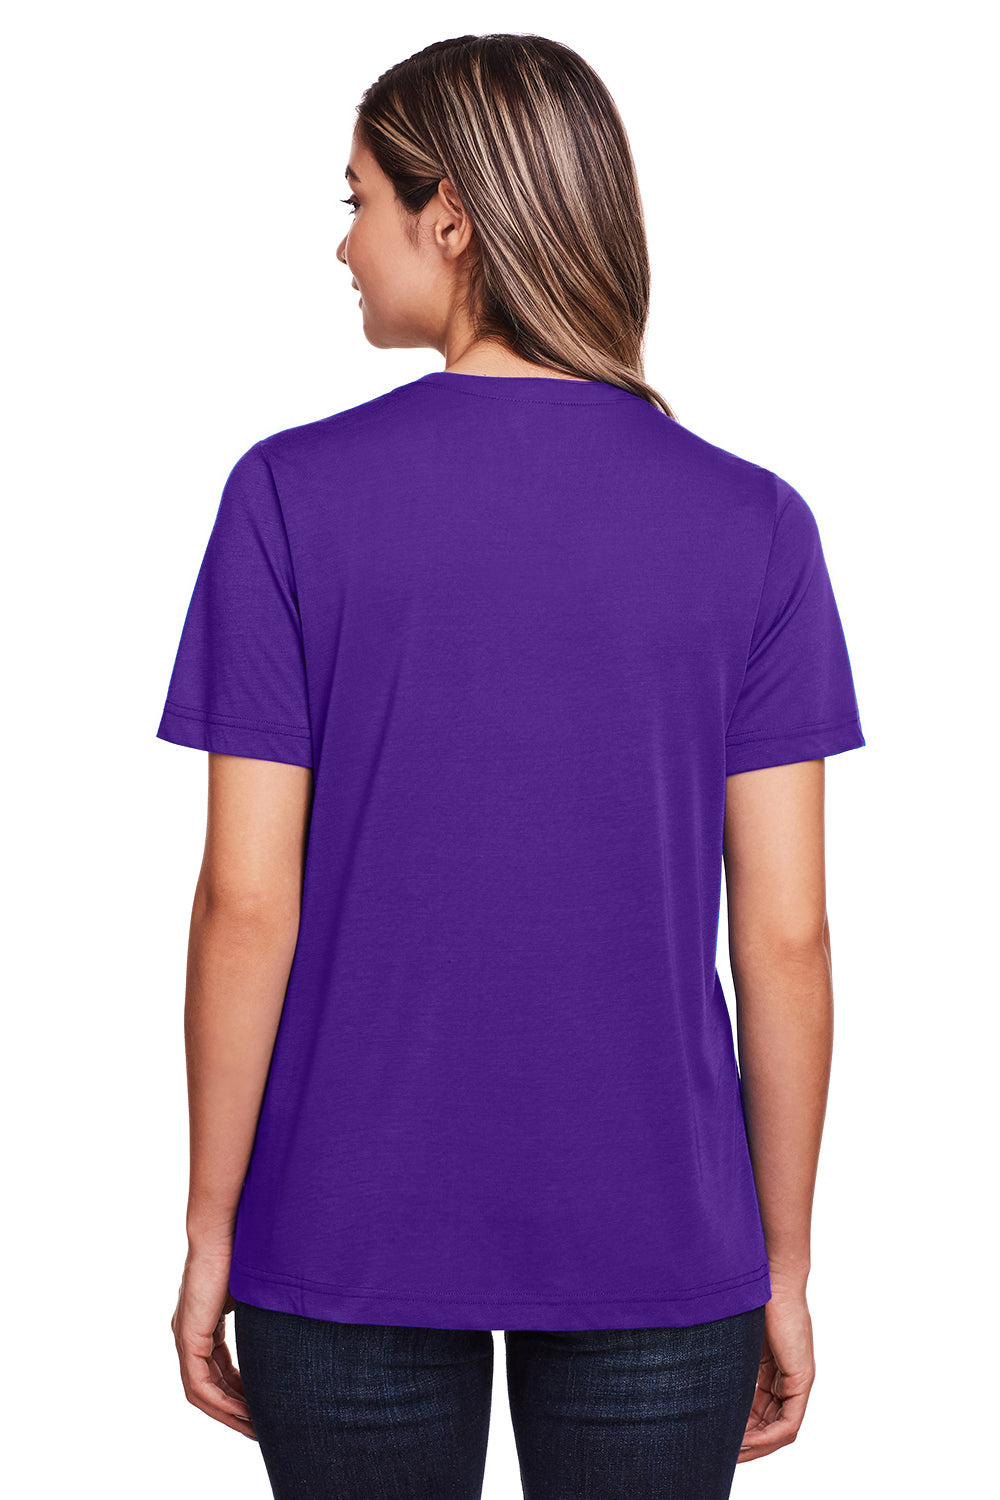 Core 365 CE111W Womens Fusion ChromaSoft Performance Moisture Wicking Short Sleeve Scoop Neck T-Shirt Purple Back